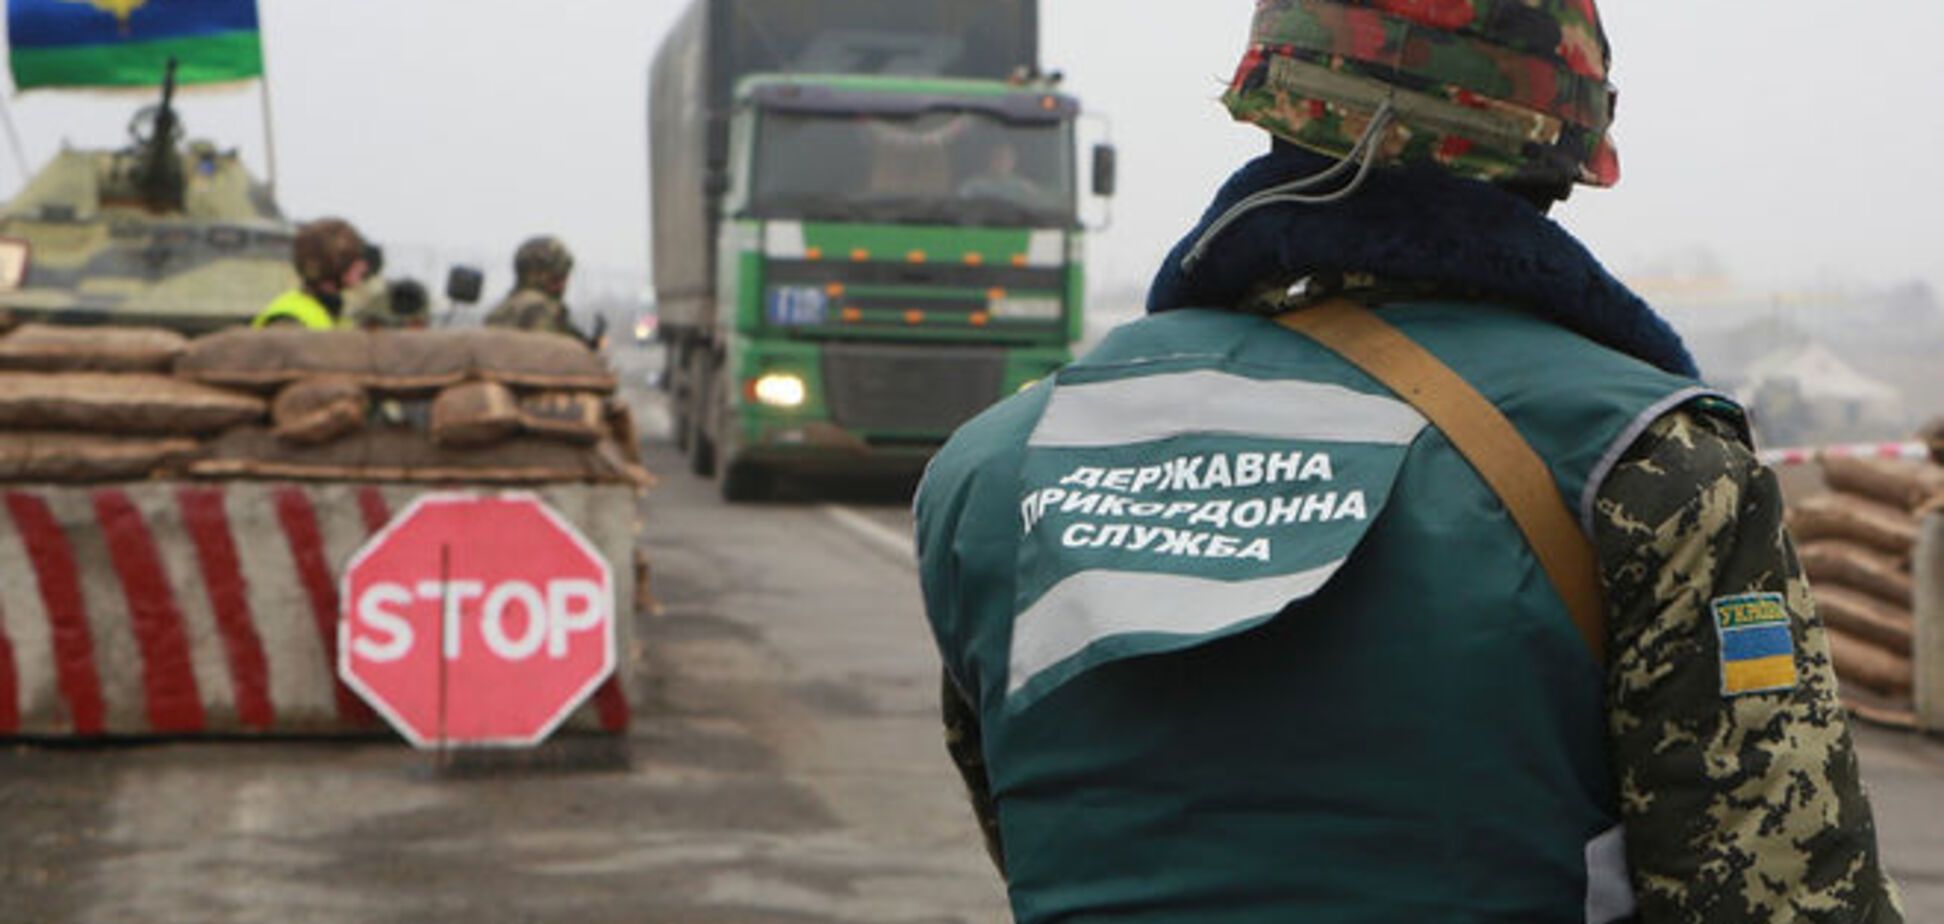 На Донбассе пограничники нашли 470 тыс грн под обшивкой грузовика